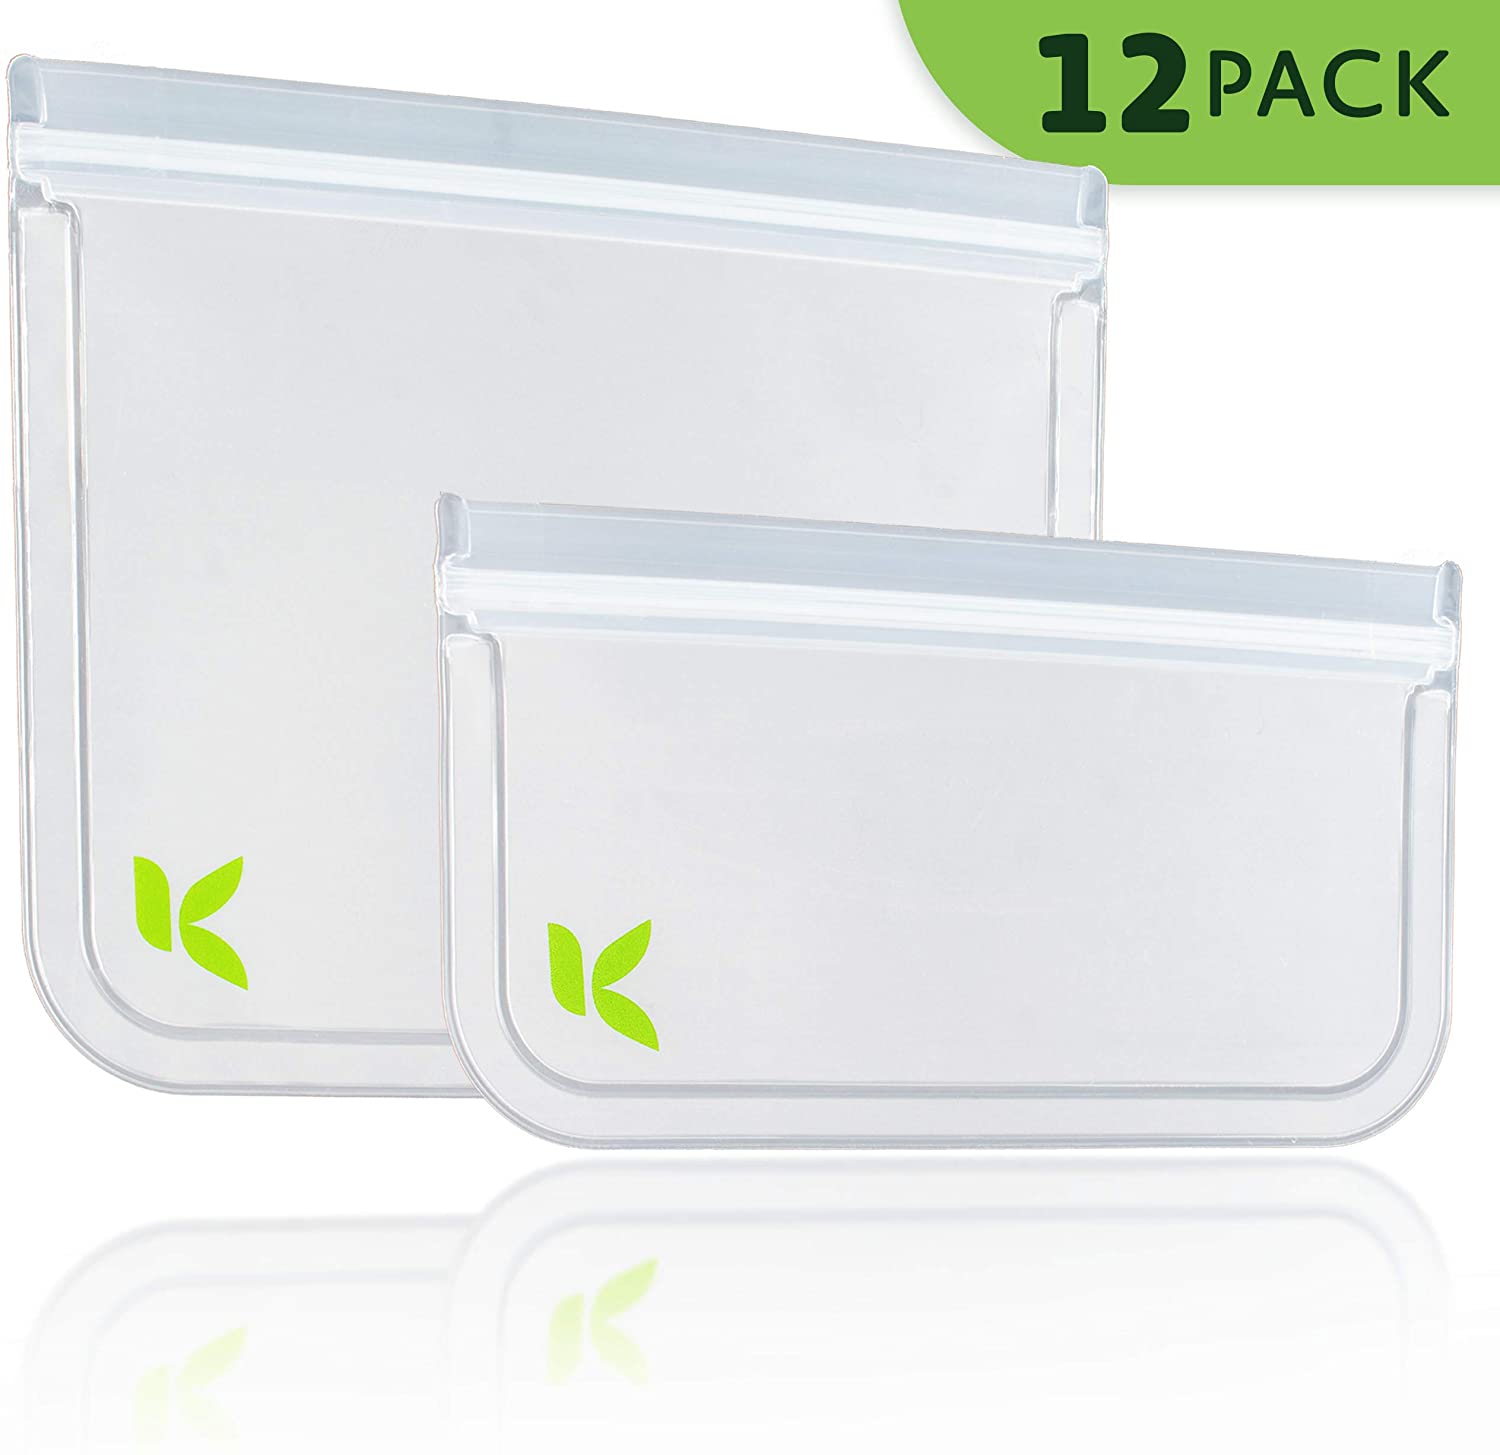 Reusable Ziplock Bags - Environmentally Friendly Food/Sandwich